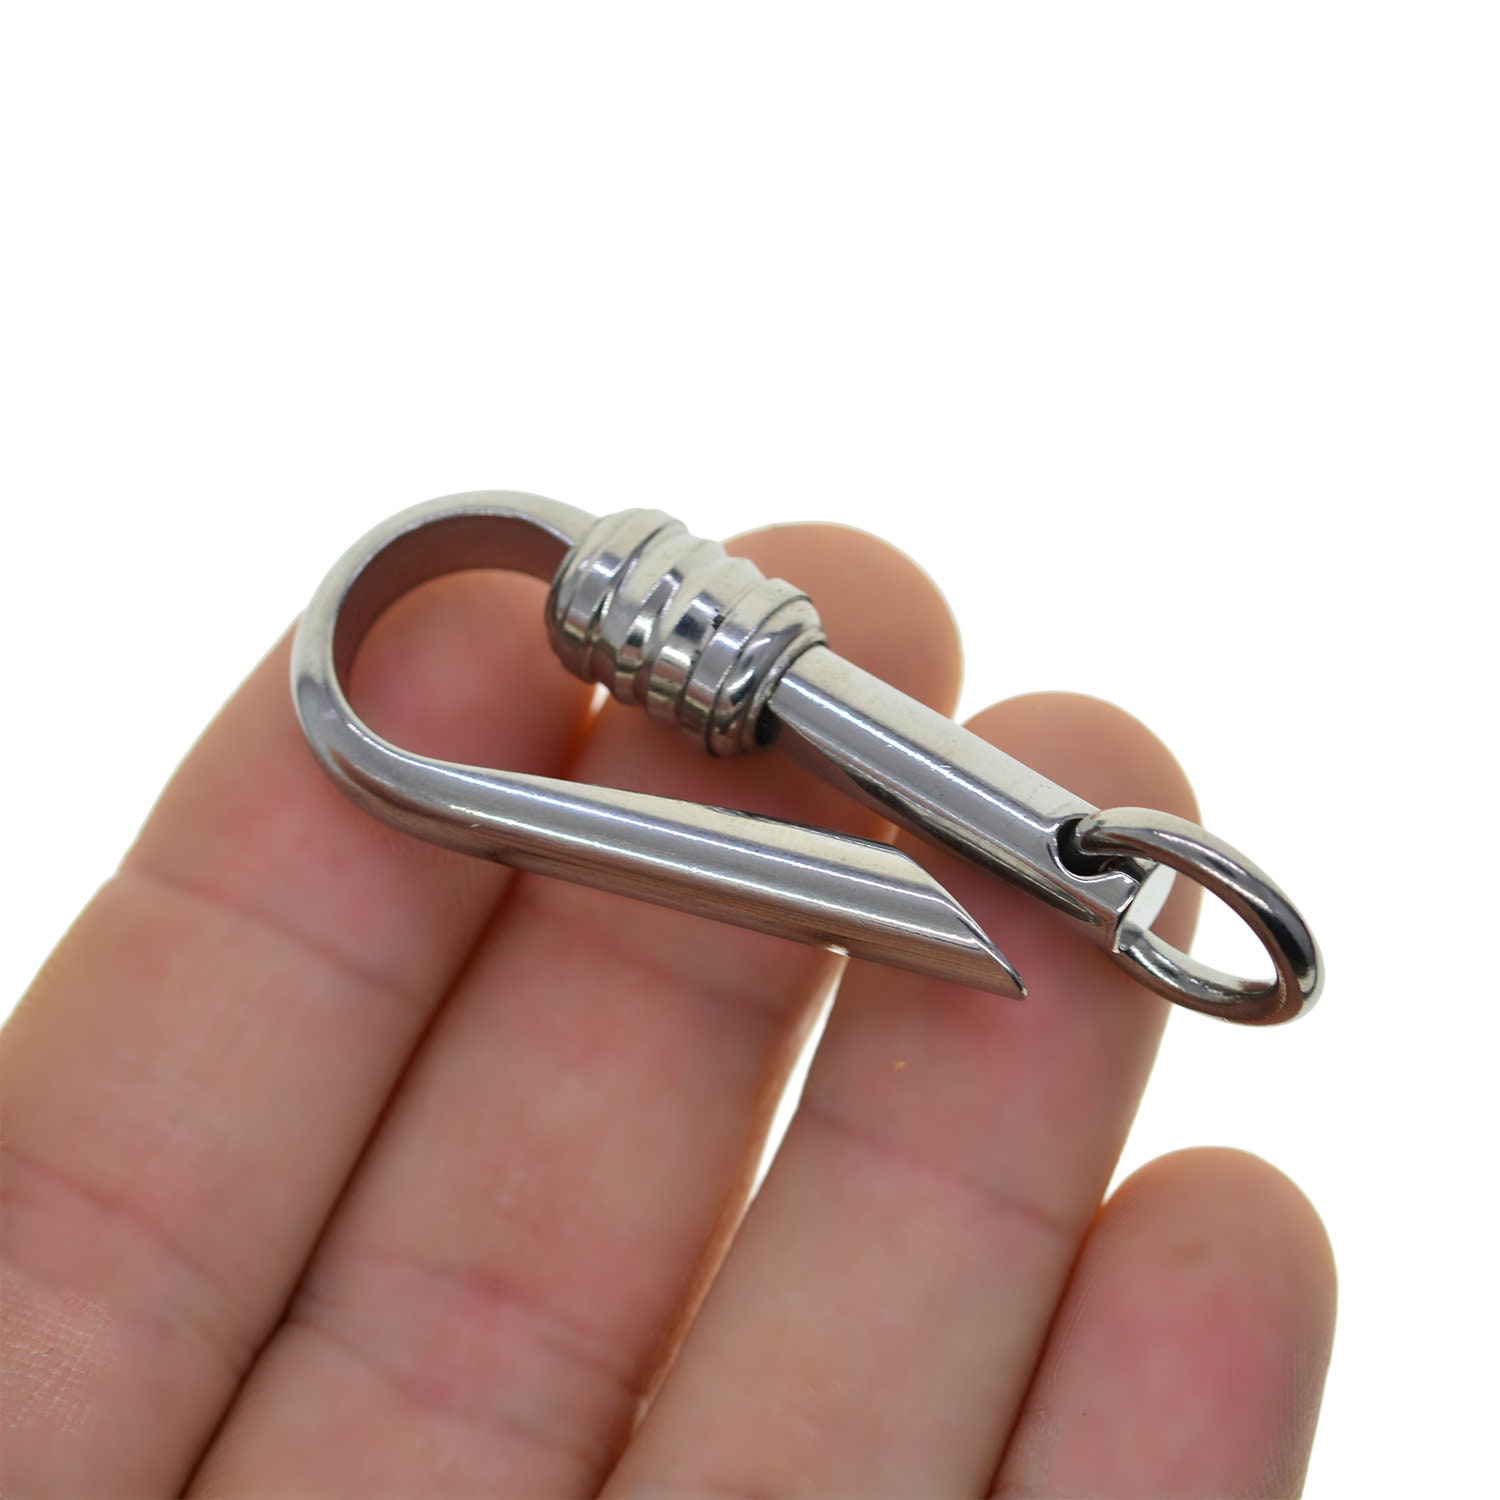 Fine Solid 314 Stainless Steel Brass Creative Slide Lock Japanese U Shape  Fish Hook Swivel D Ring Keychain Key Ring Holder FOB EDC DIY -  Finland